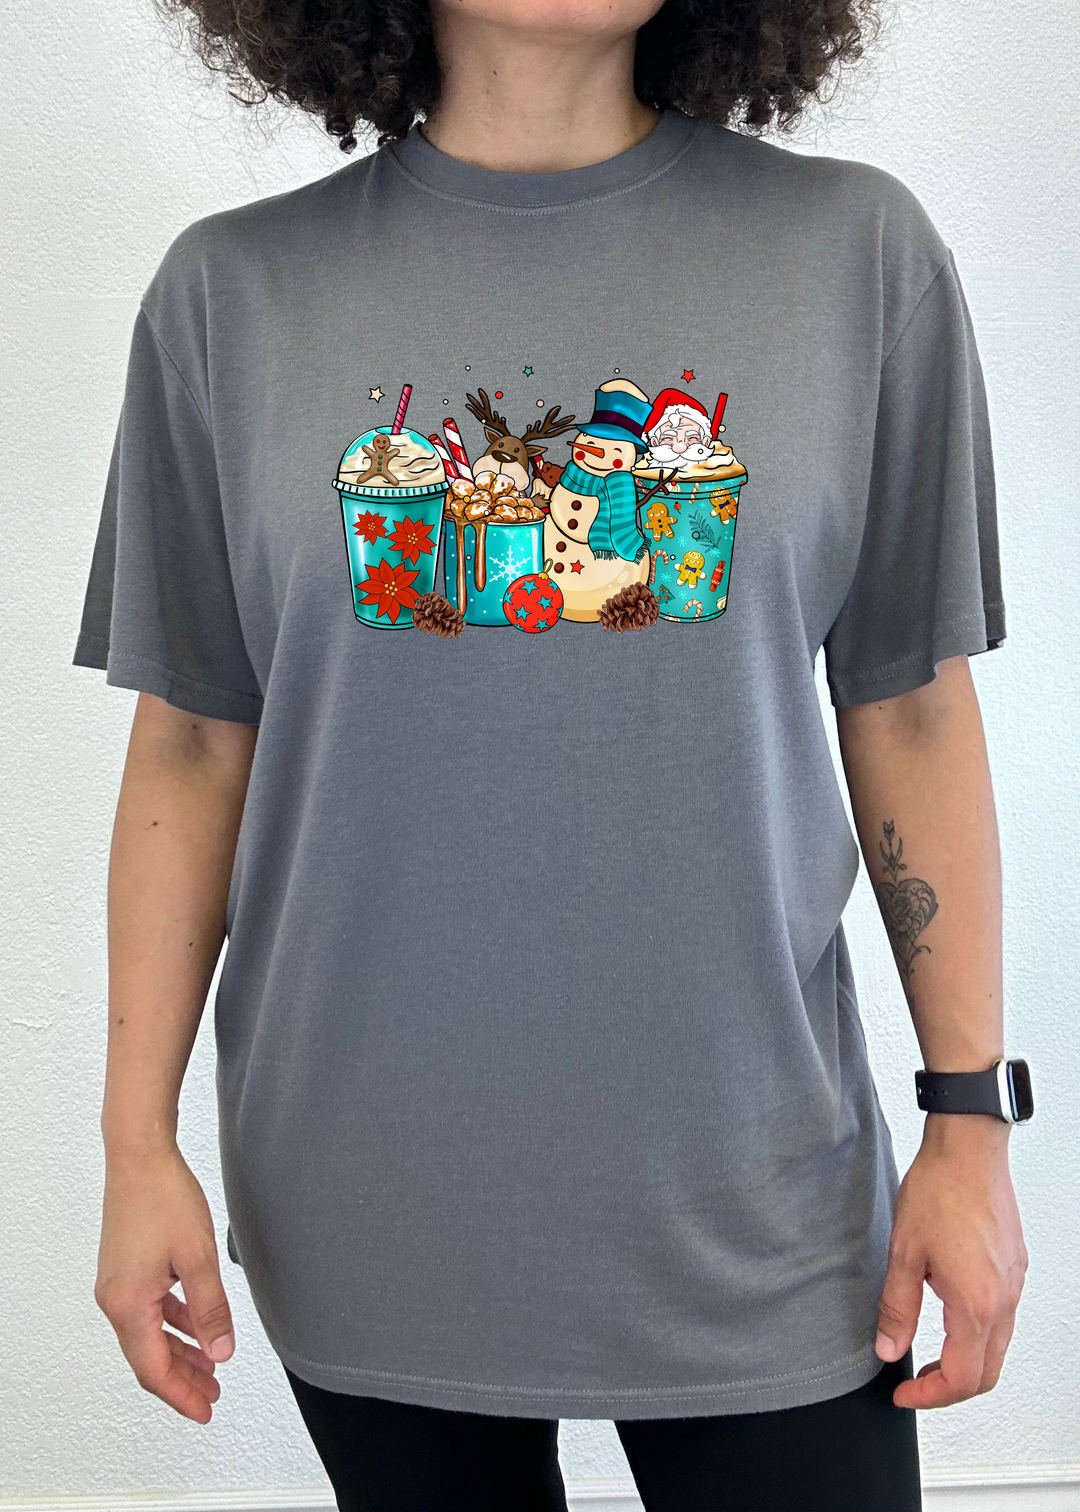 Funny Ugly Sweater Christmas Unisex Bamboo Viscose/Organic Cotton Short Sleeve Graphic T-Shirt